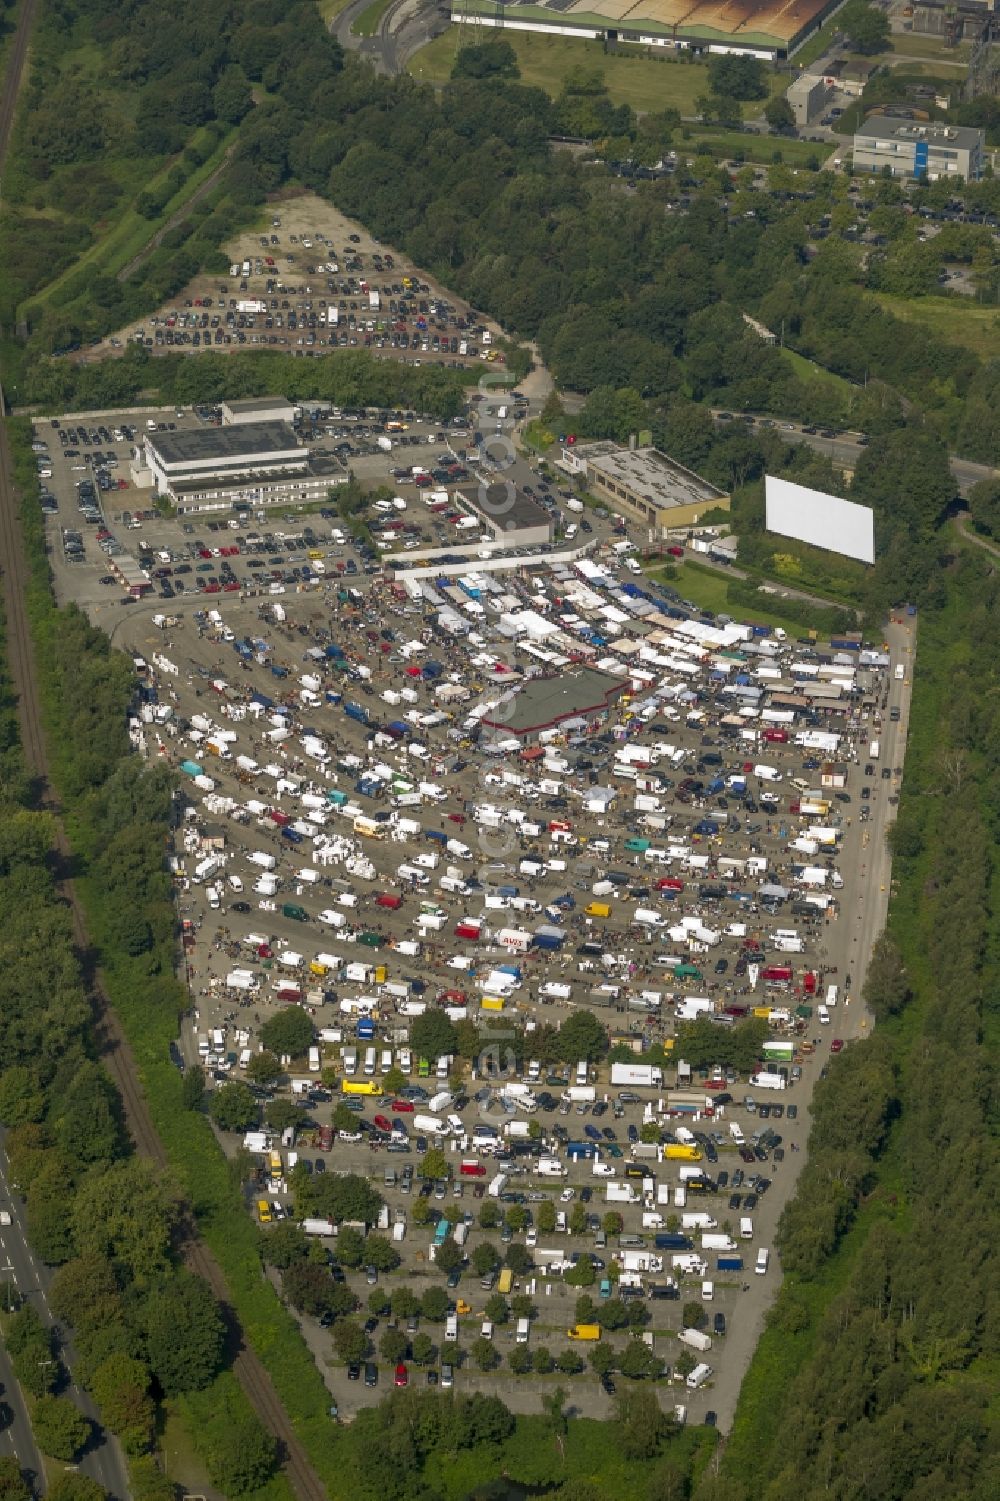 Aerial image Essen - Auto parts market, flea market and drive-in area in Essen in North Rhine-Westphalia